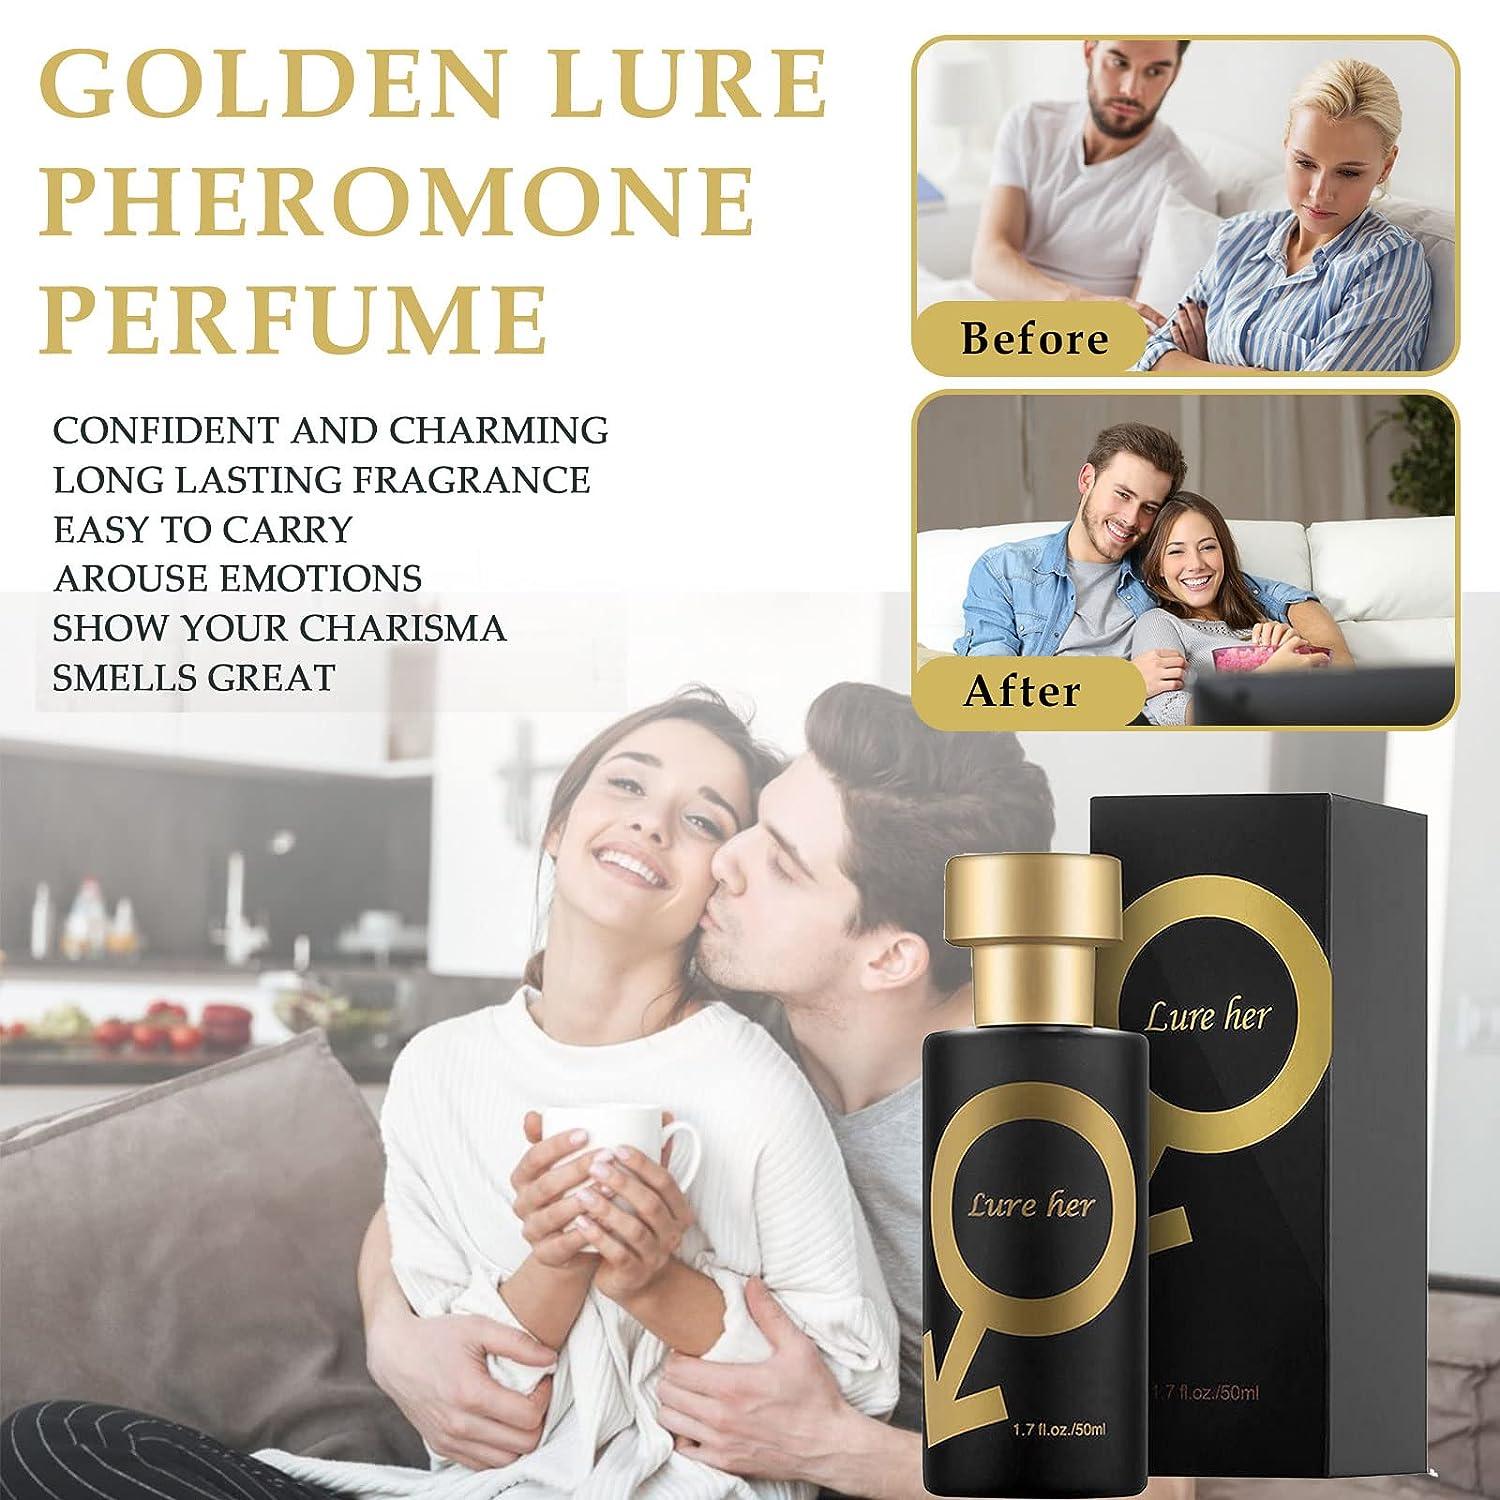 Hcomine Lure Her Perfume para hombres, Colonia de feromonas